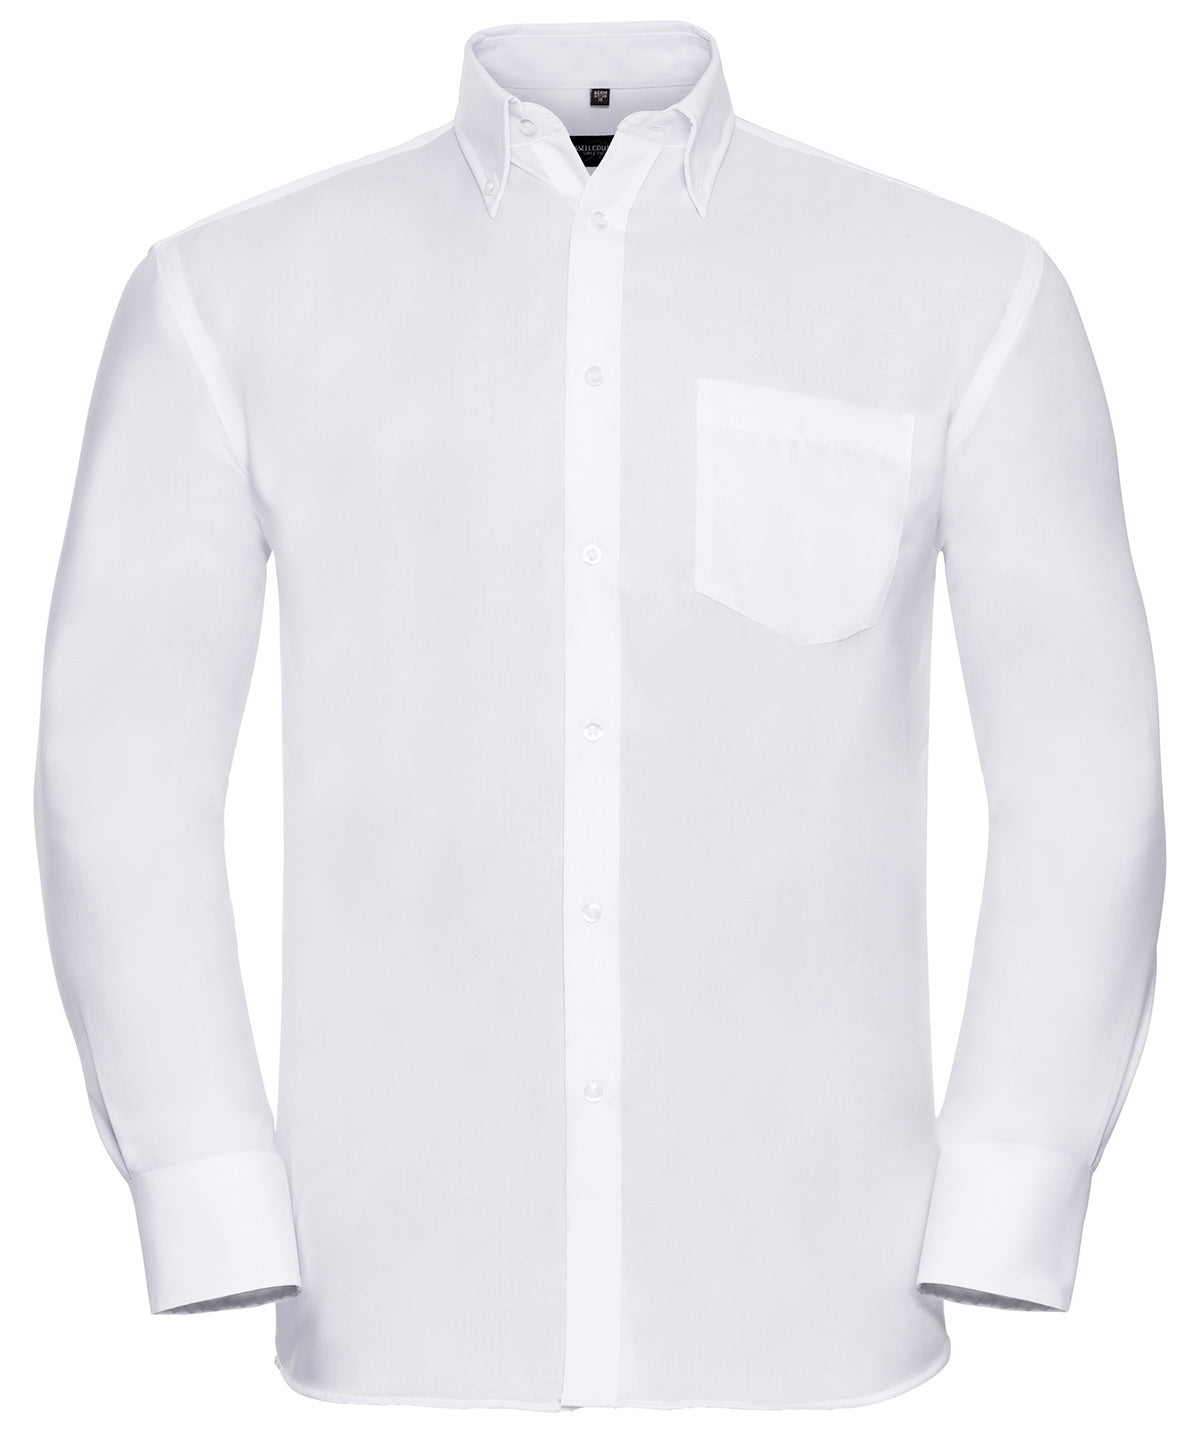 Bolir - Long Sleeve Ultimate Non-iron Shirt